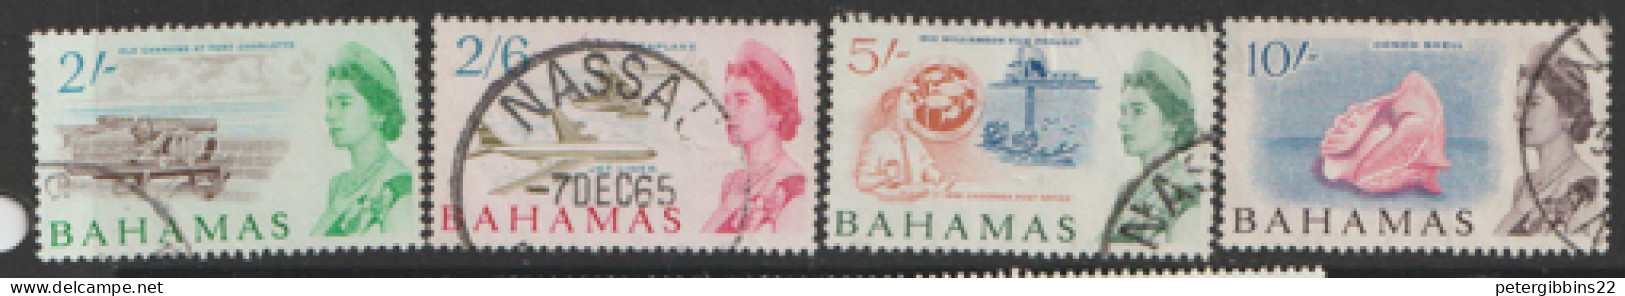 Bahamas 1965  SG 257-60  Fine Used - 1963-1973 Autonomia Interna